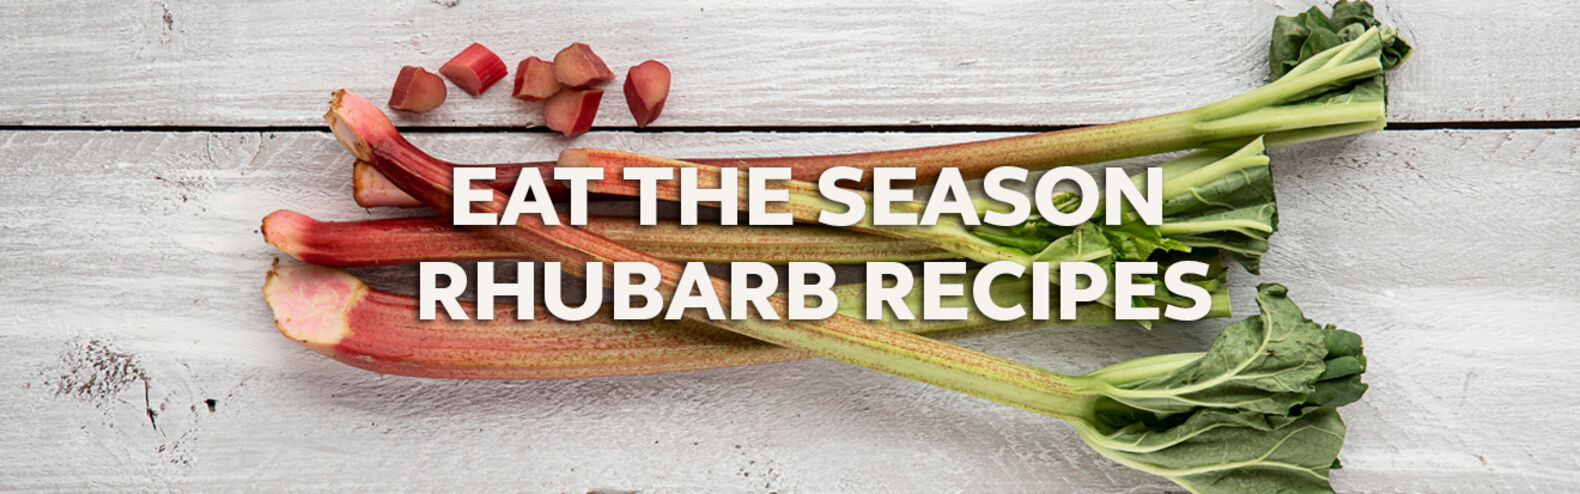 SuperValu Fruit and Veg Eat the Season Rhubarb